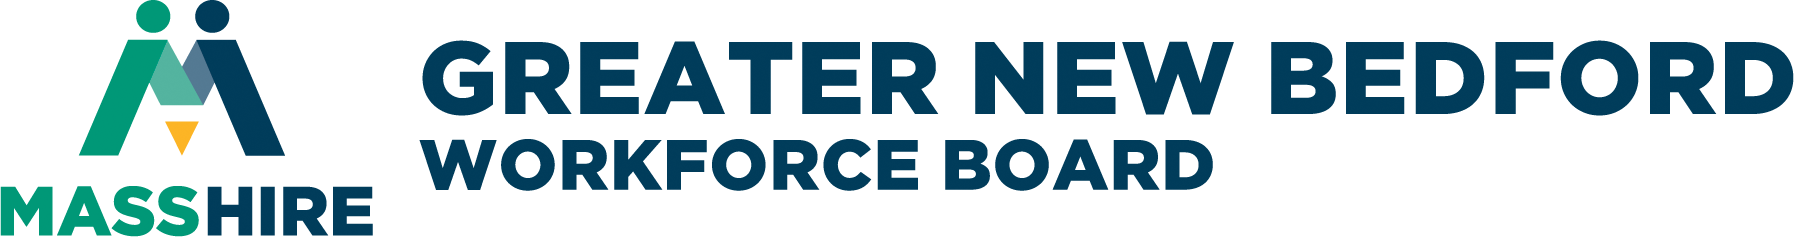 MassHire Greater New Bedford Workforce Board logo